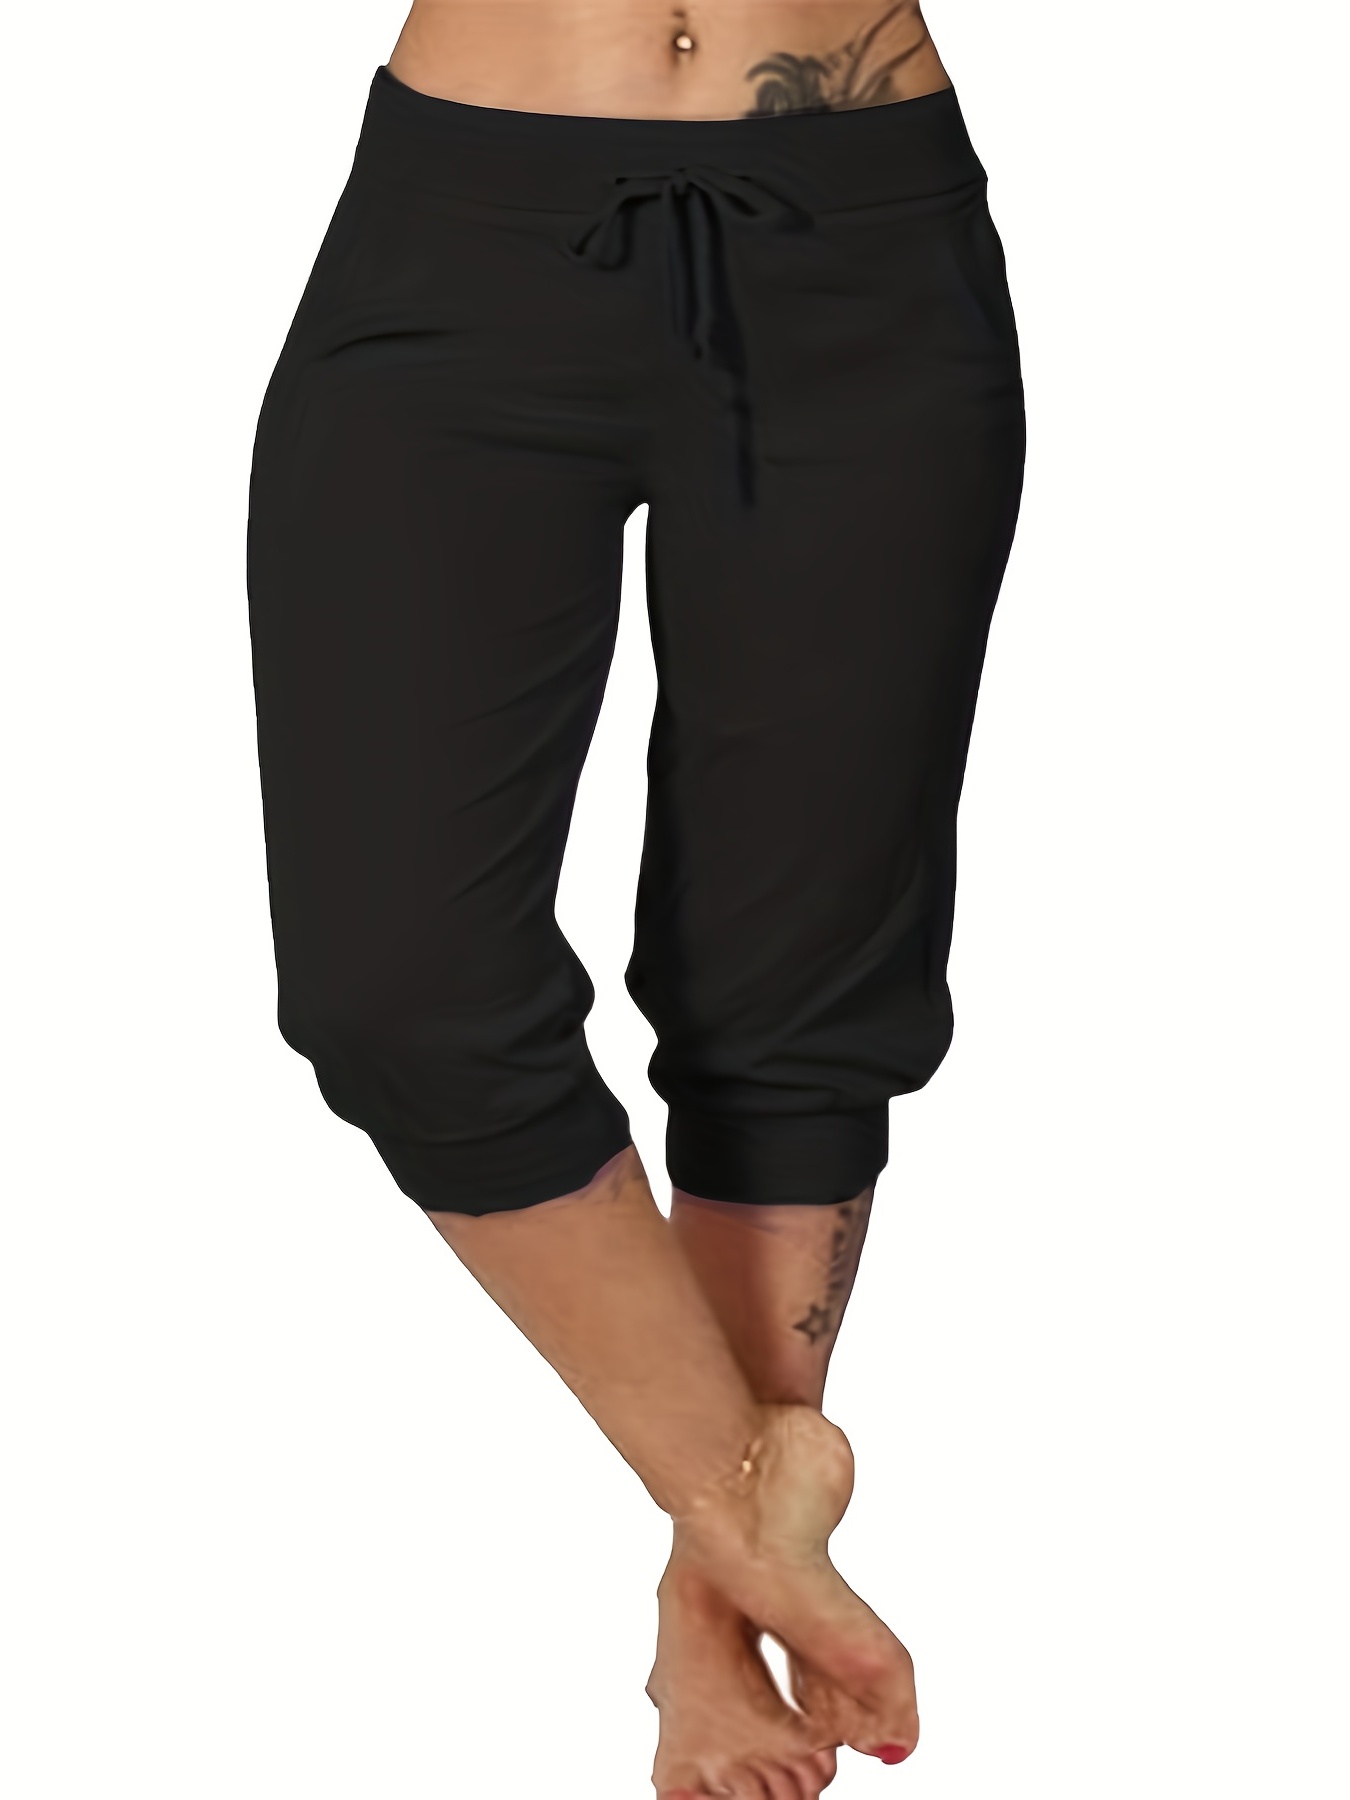 Plus Size Capris For Women - Cotton Capri Pants - Black, Ladies Cotton Capri,  महिलाओं की सूती कैपरी, वूमेन कॉटन कैपरी - Tanya Enterprises, Ludhiana